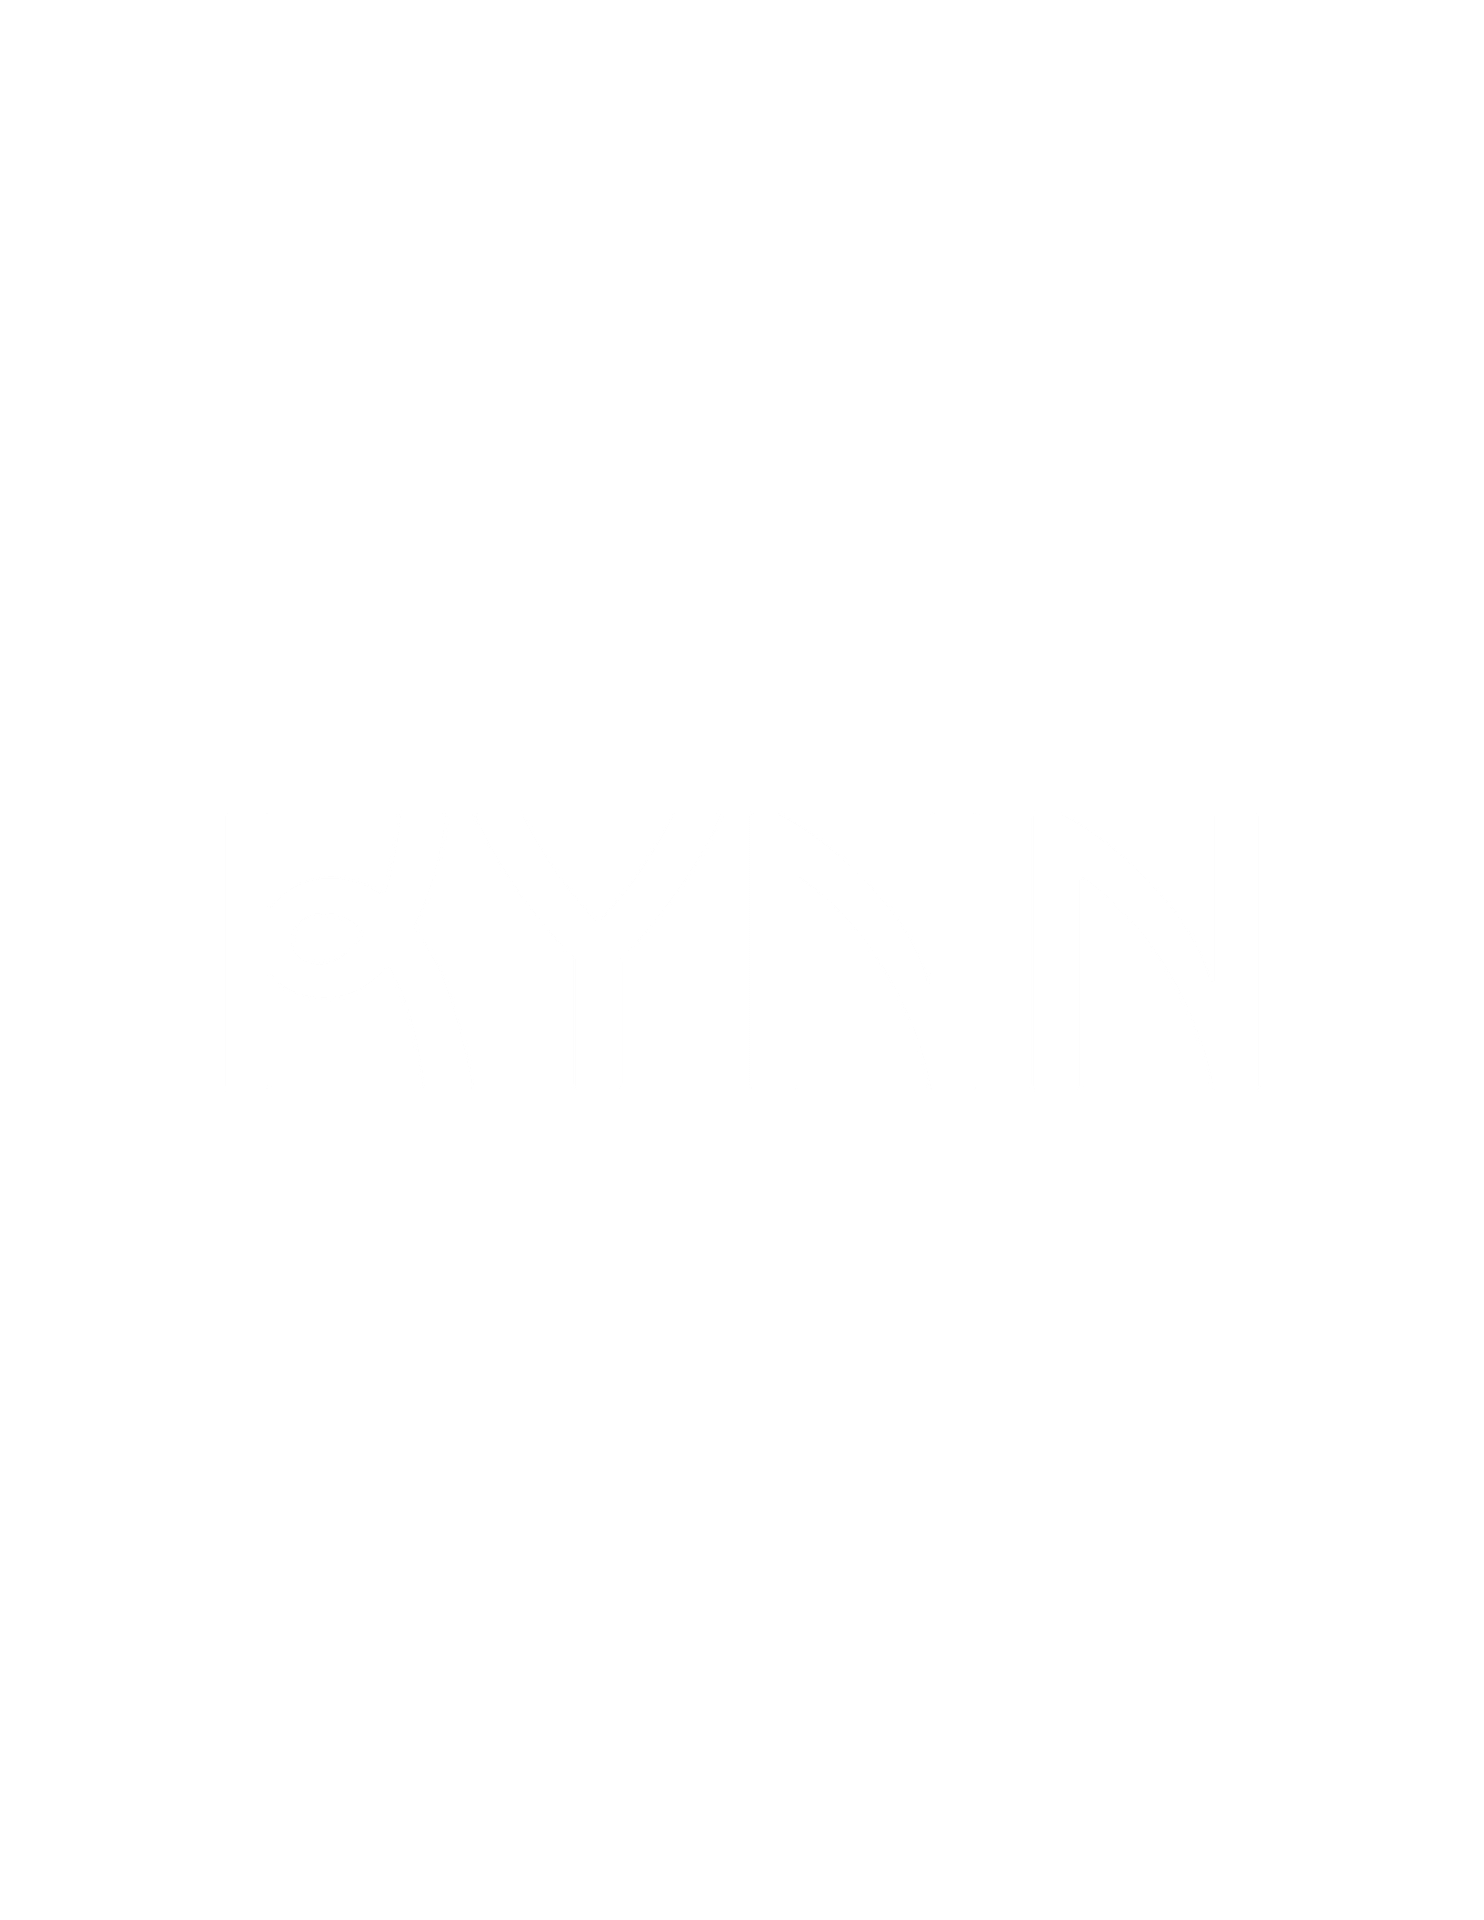 Kynn